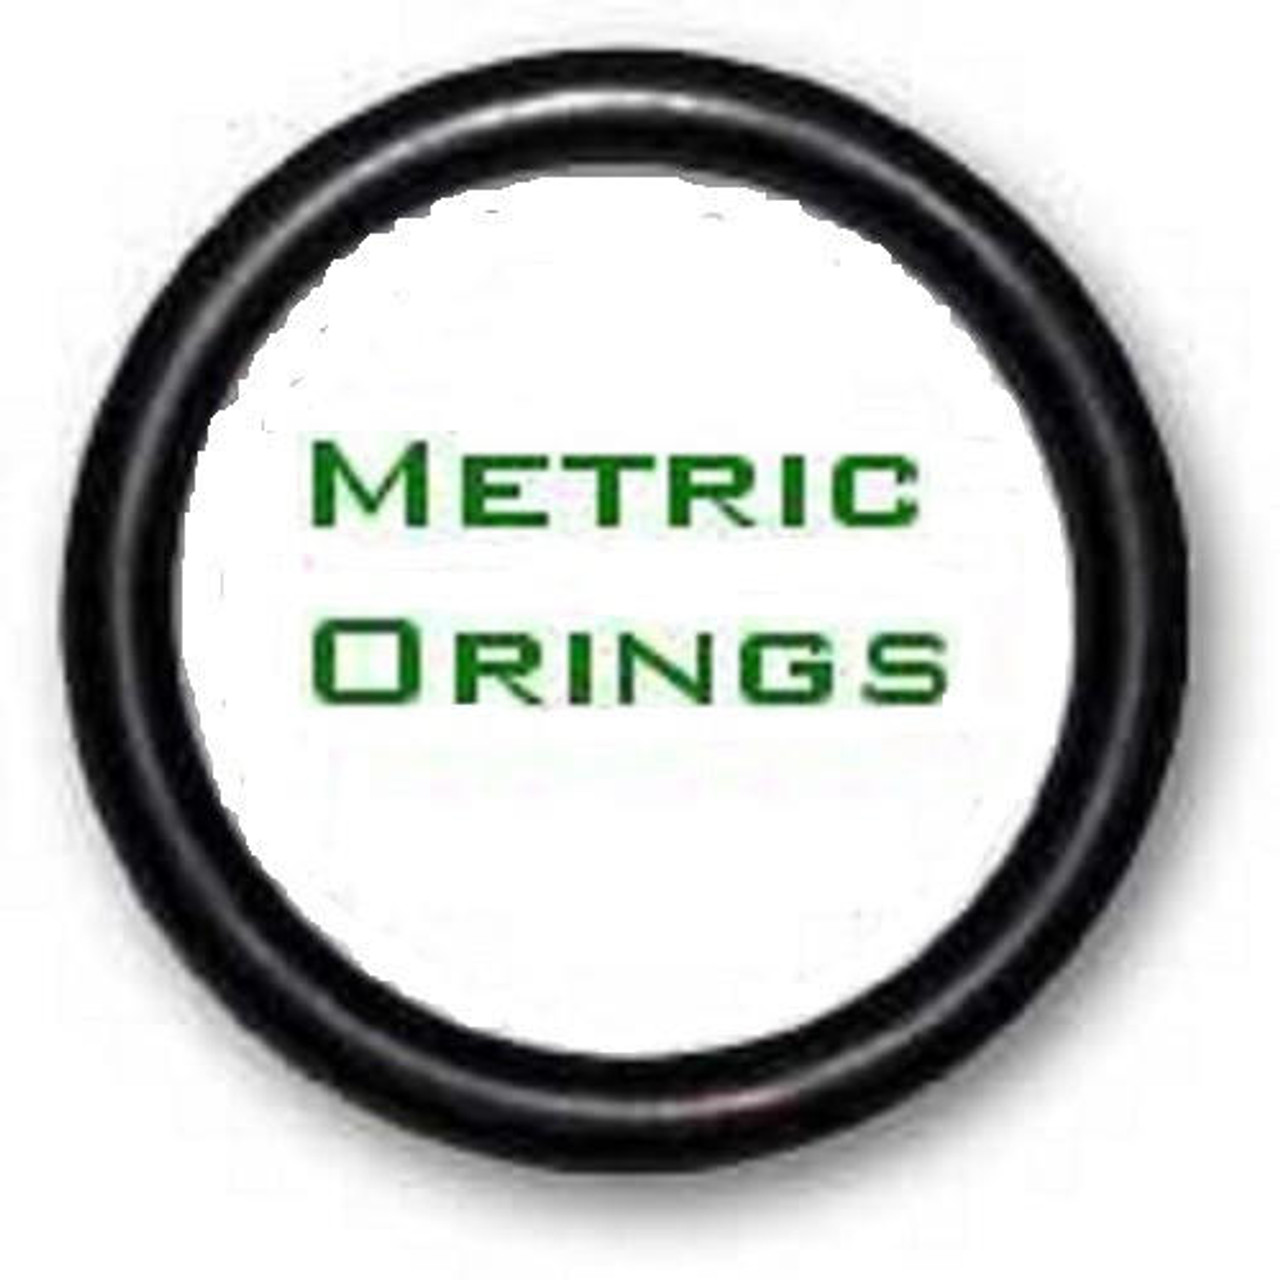 Metric Buna  O-rings 99 x 5mm Price for 1 pcs